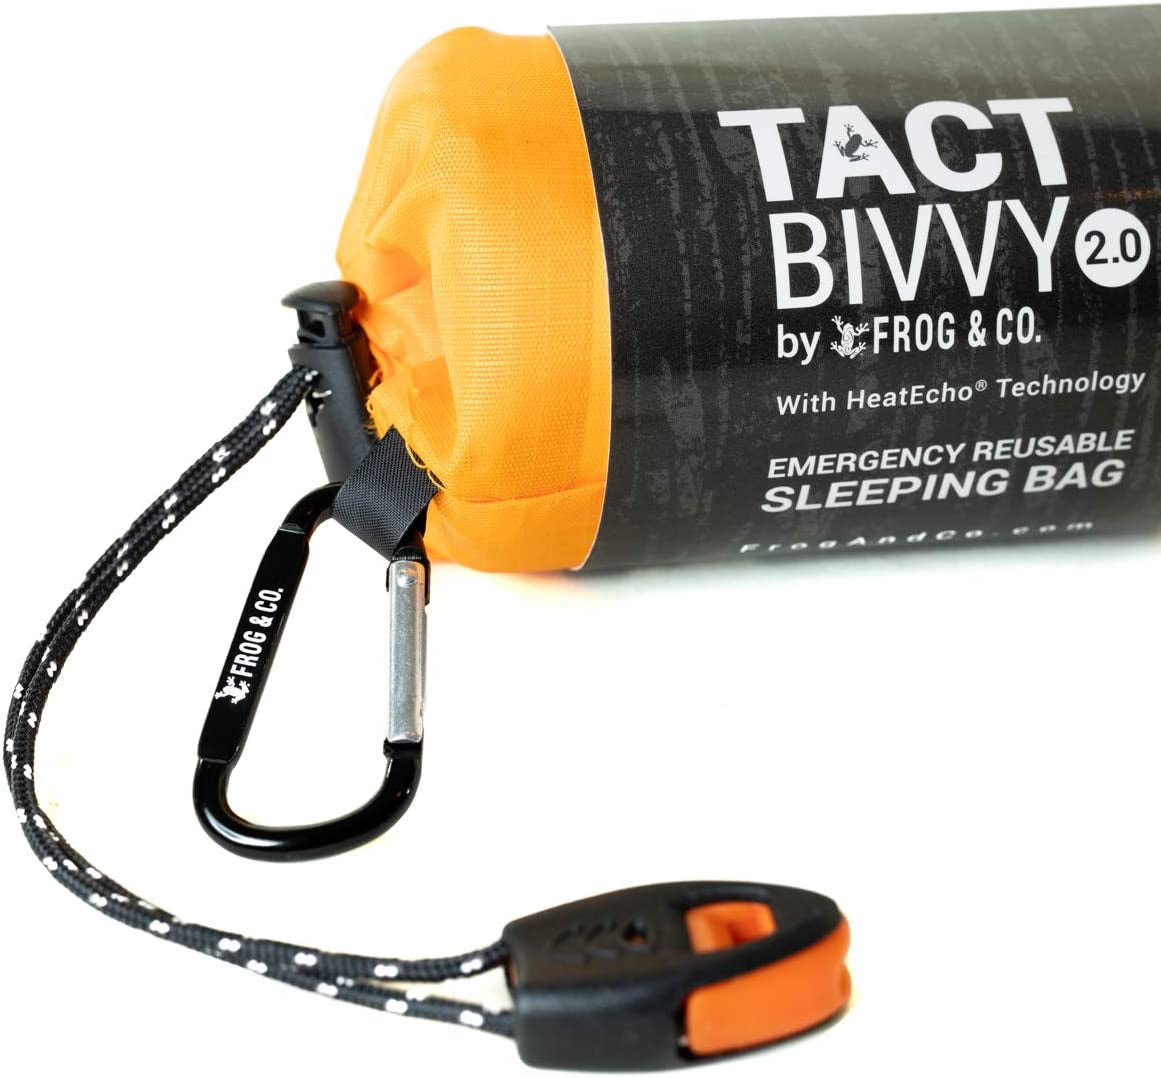 Tact Bivvy 2.0 Emergency Sleeping Bag W/Stuff Sack, Carabiner, Survival Whistle, Paratinder - Compact, Lightweight, Waterproof, Reusable, Thermal Bivy Sack Cover, Shelter Kit